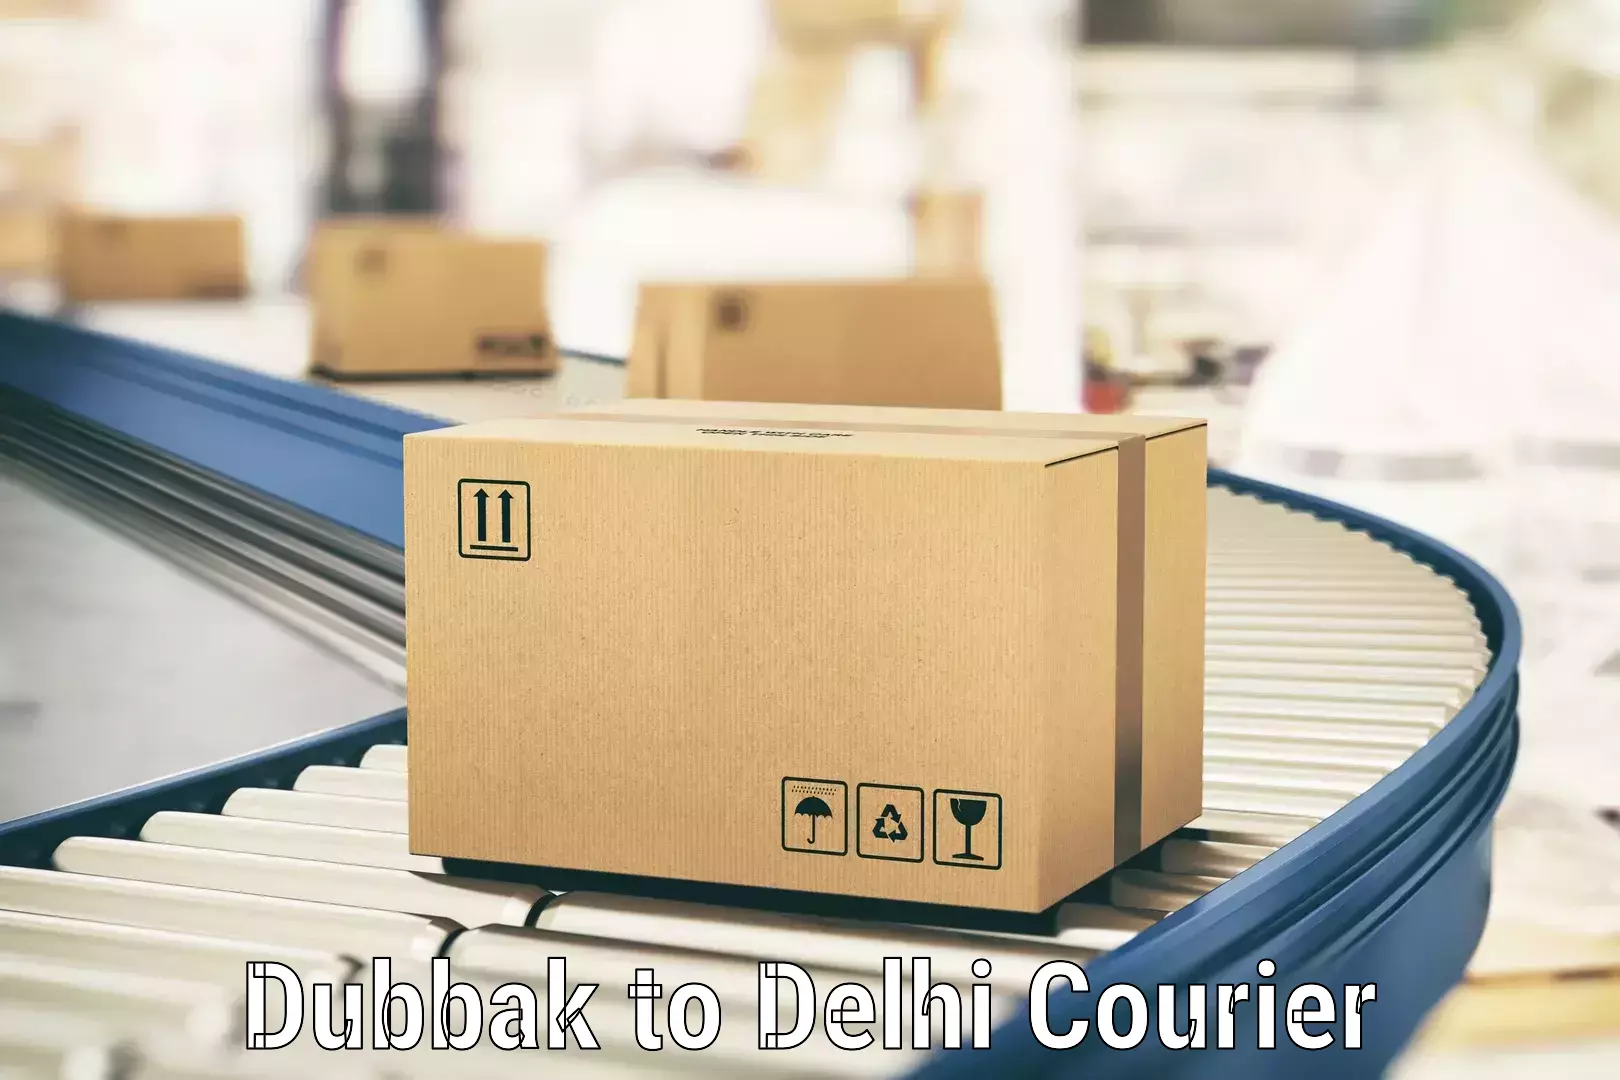 On-demand delivery in Dubbak to East Delhi